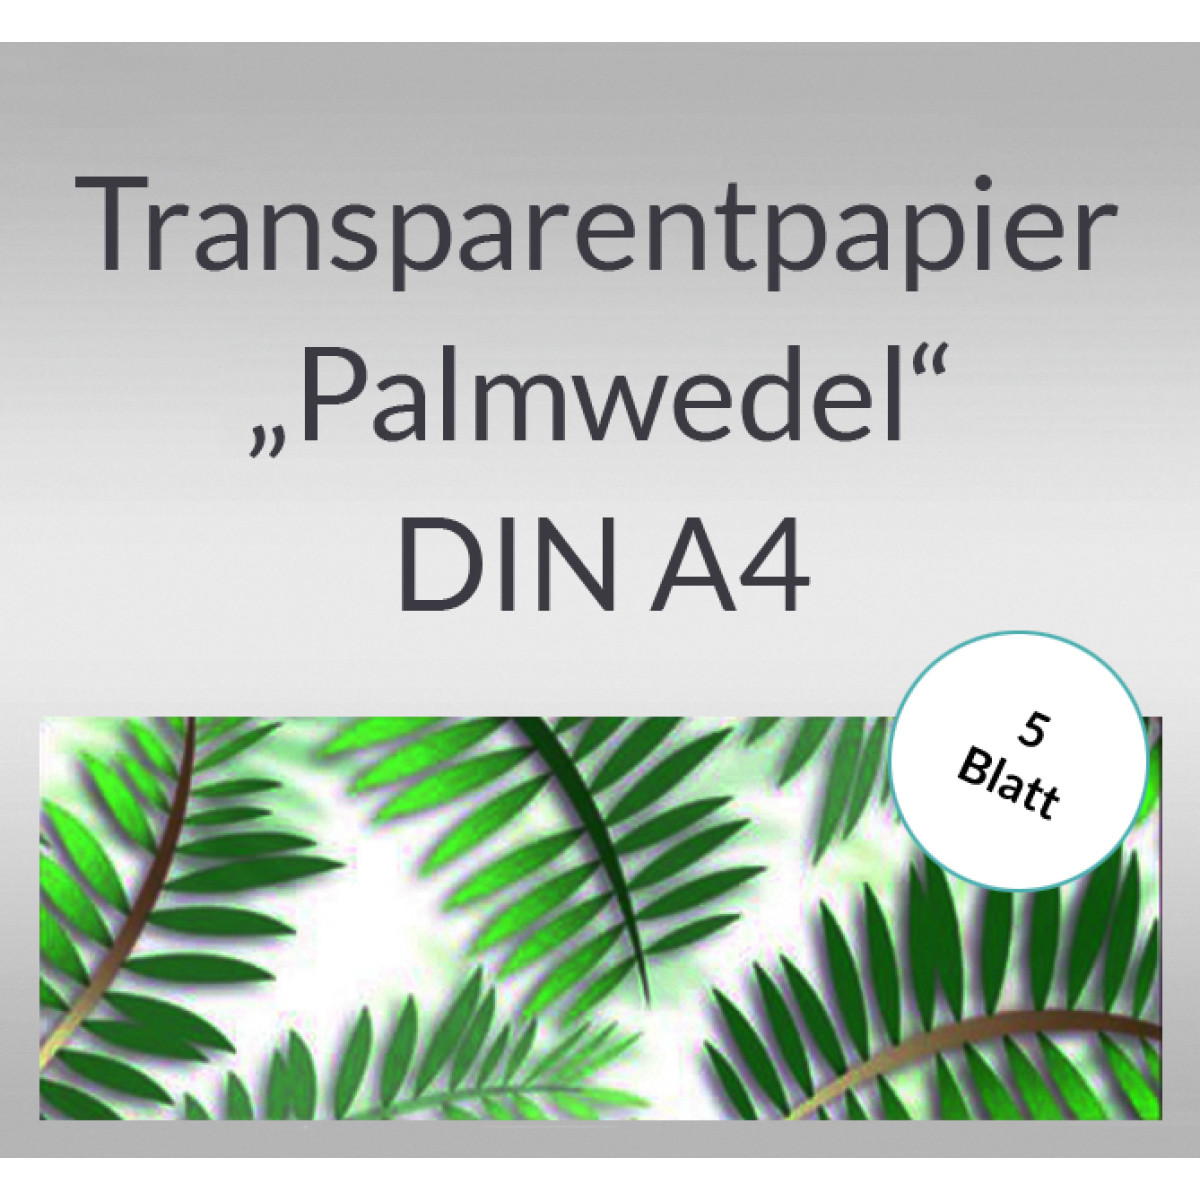 Transparentpapier "Palmwedel" DIN A4 - 5 Blatt